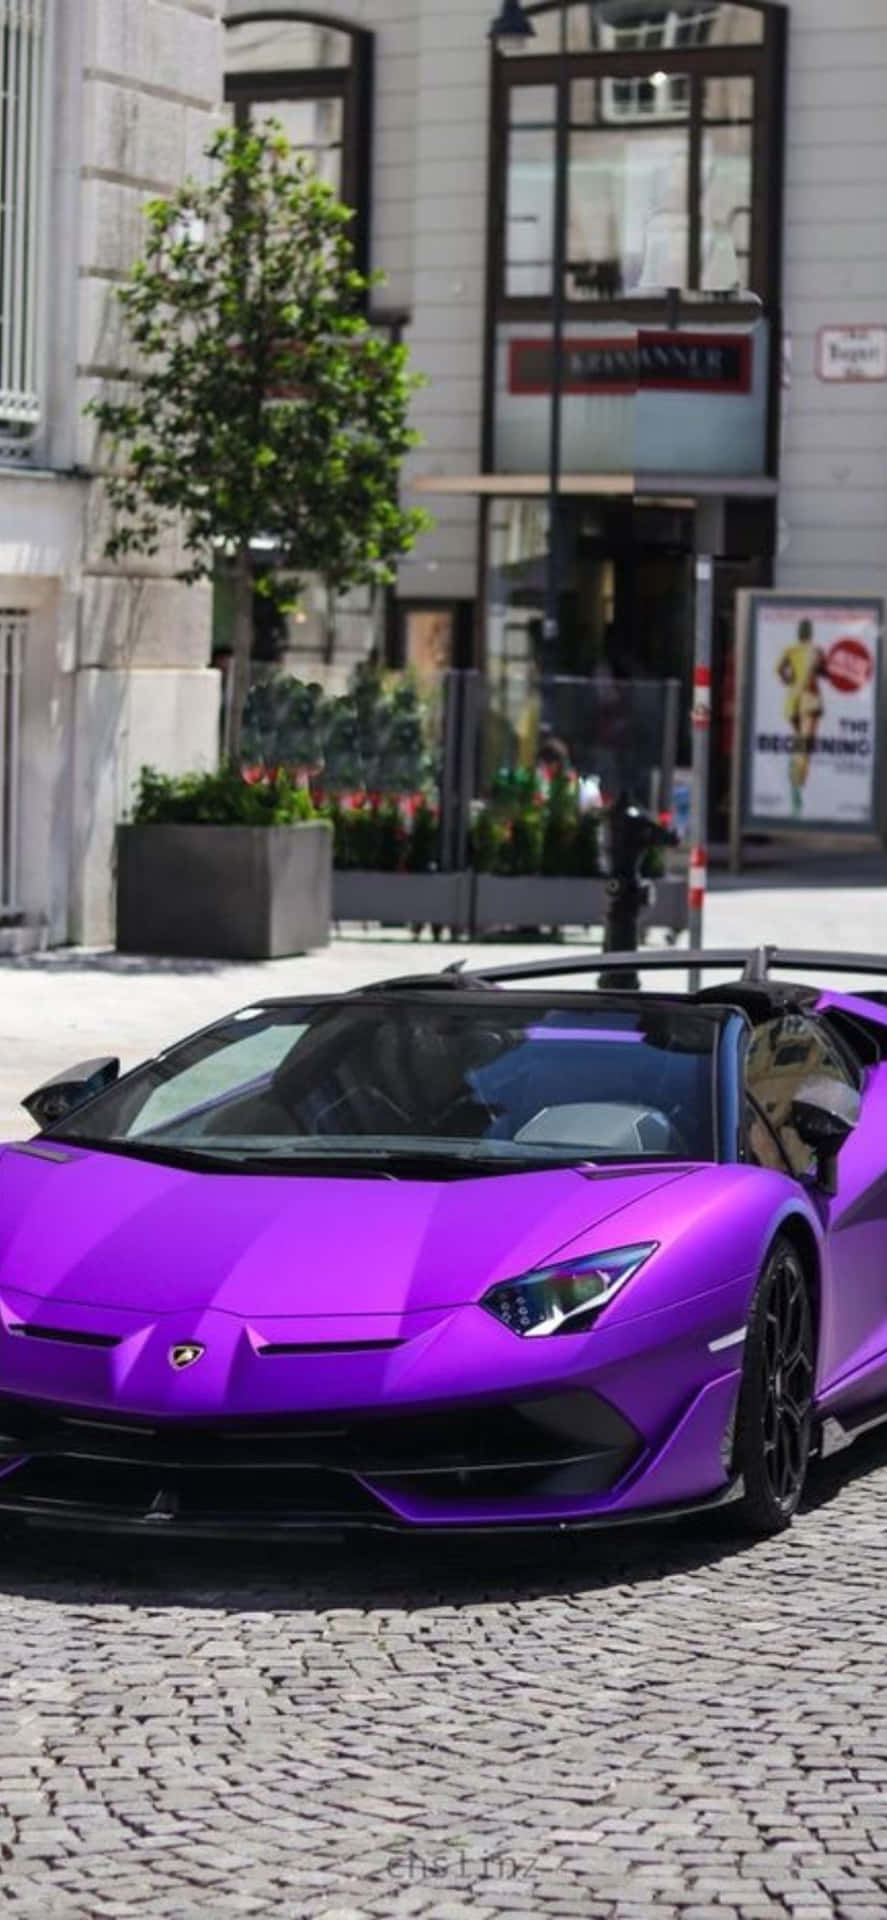 iPhone XS Max Lamborghini Purple Aventador Background